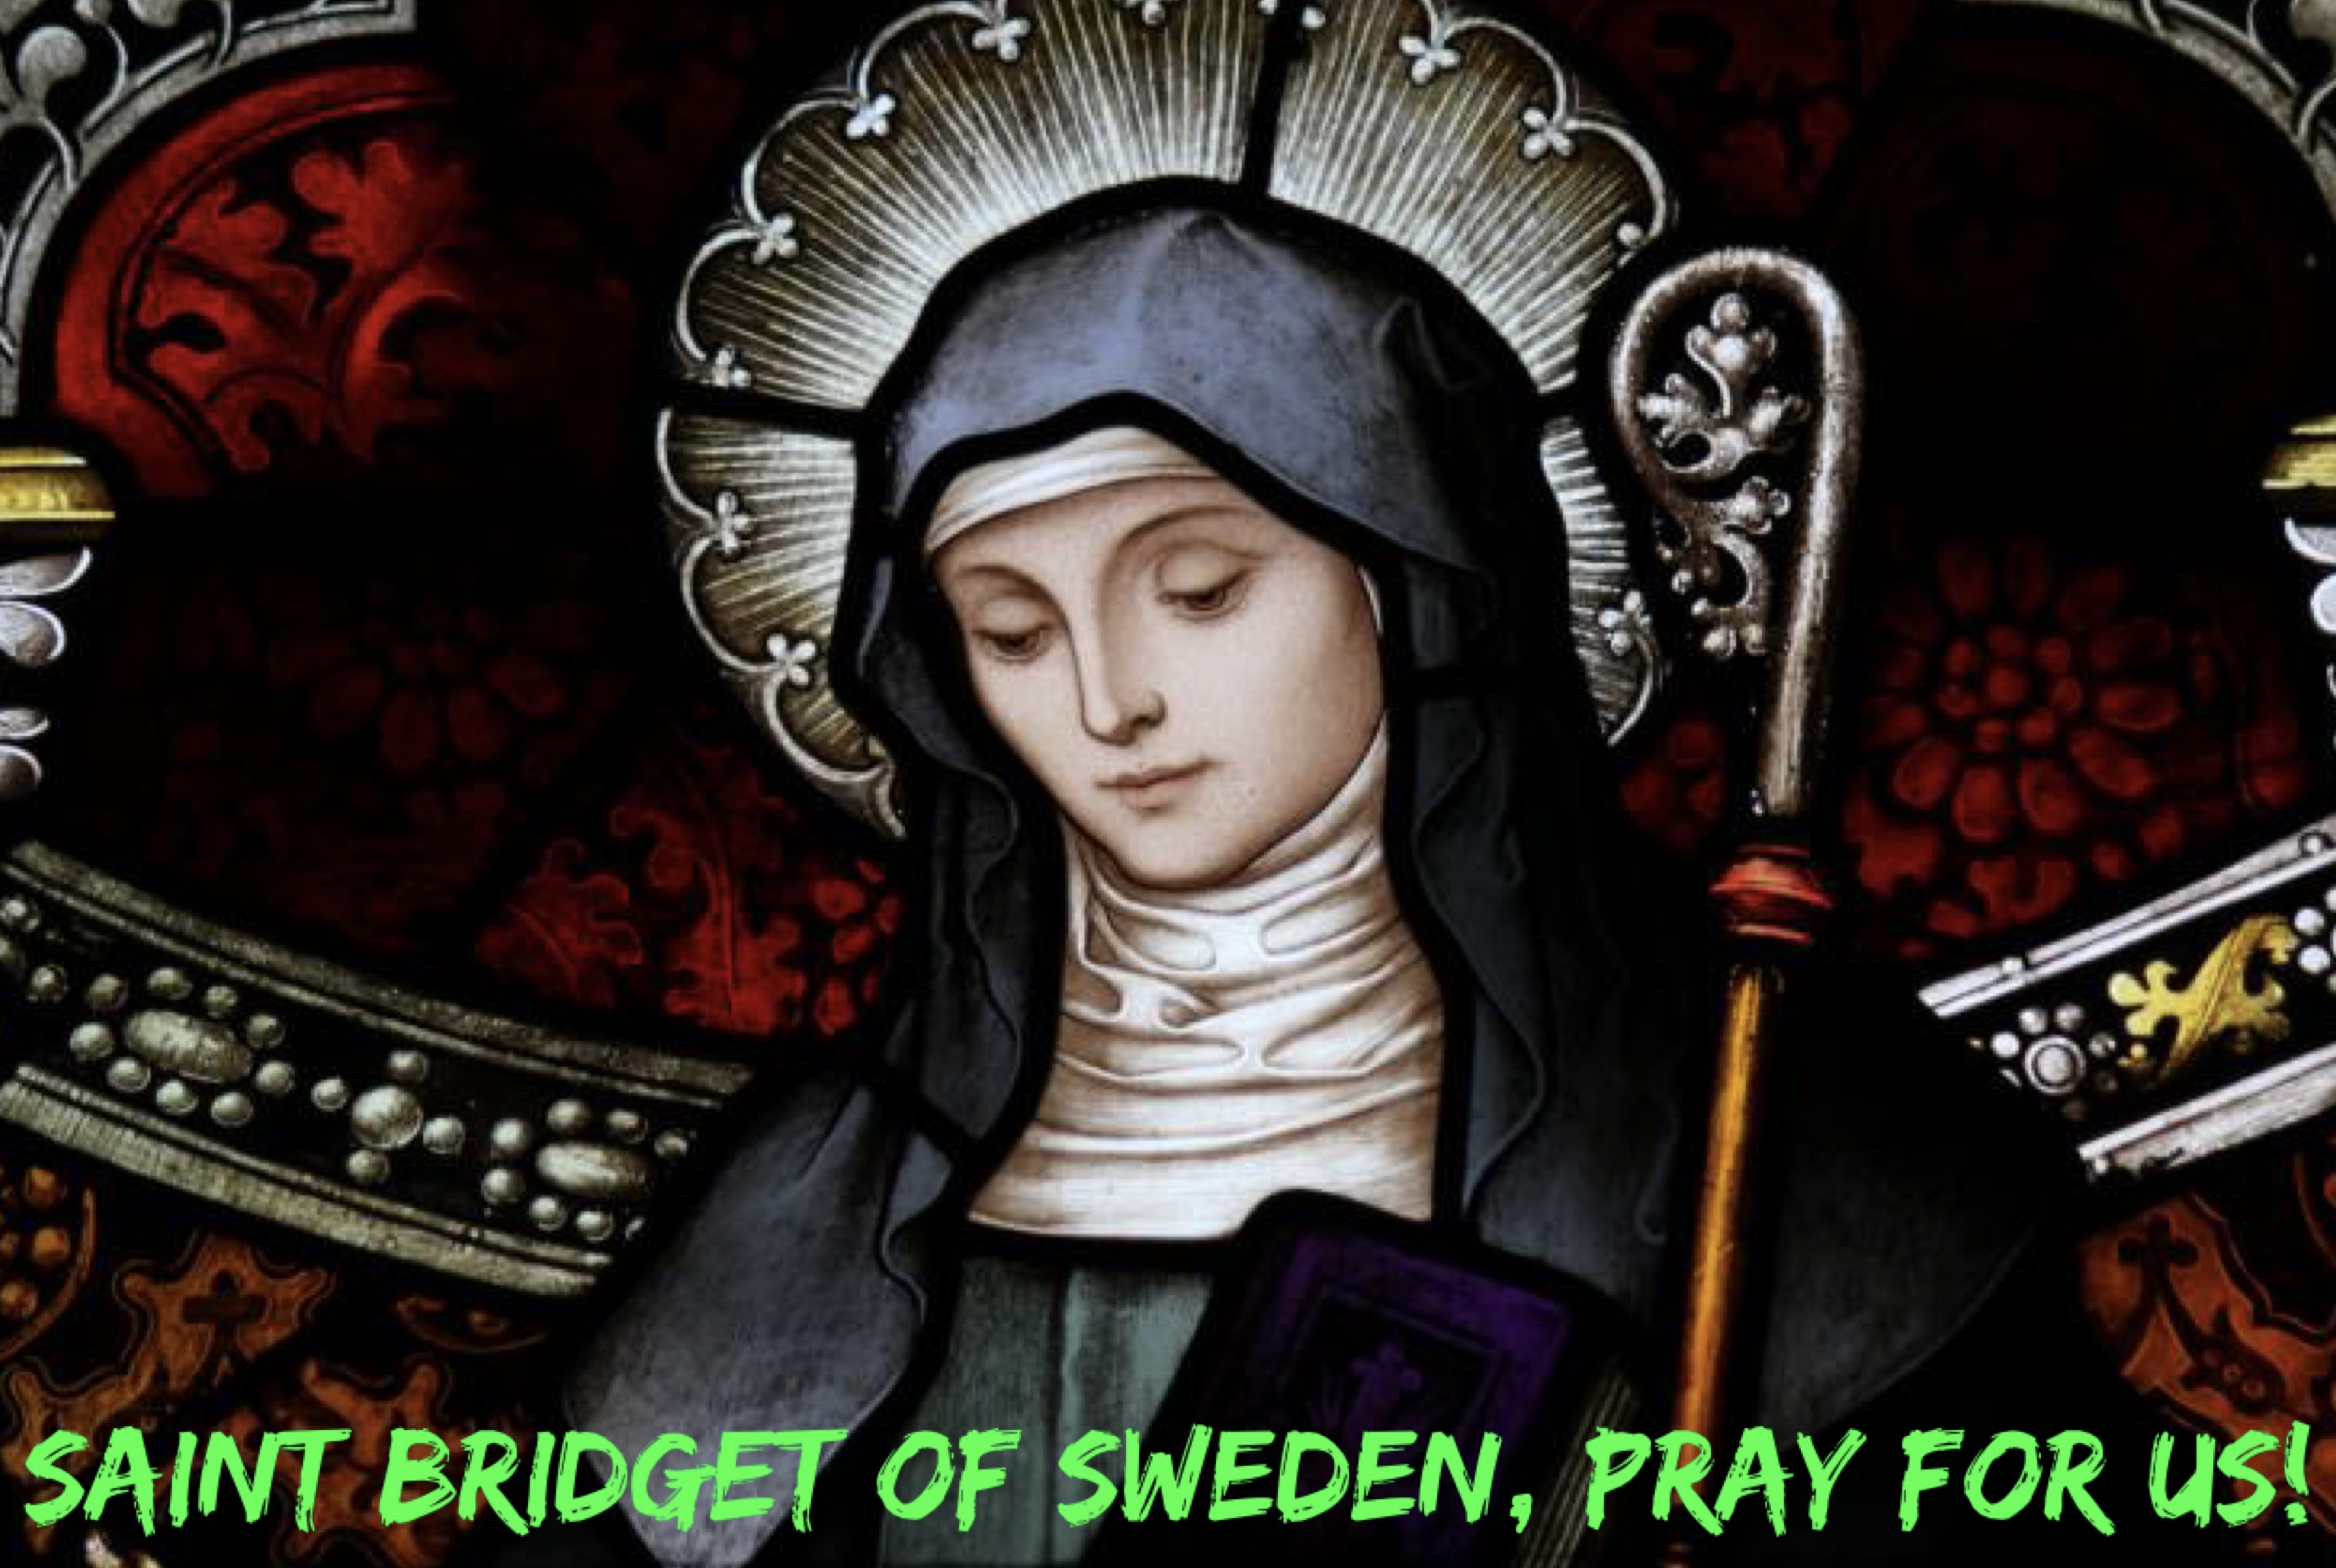 23rd July – Saint Bridget of Sweden